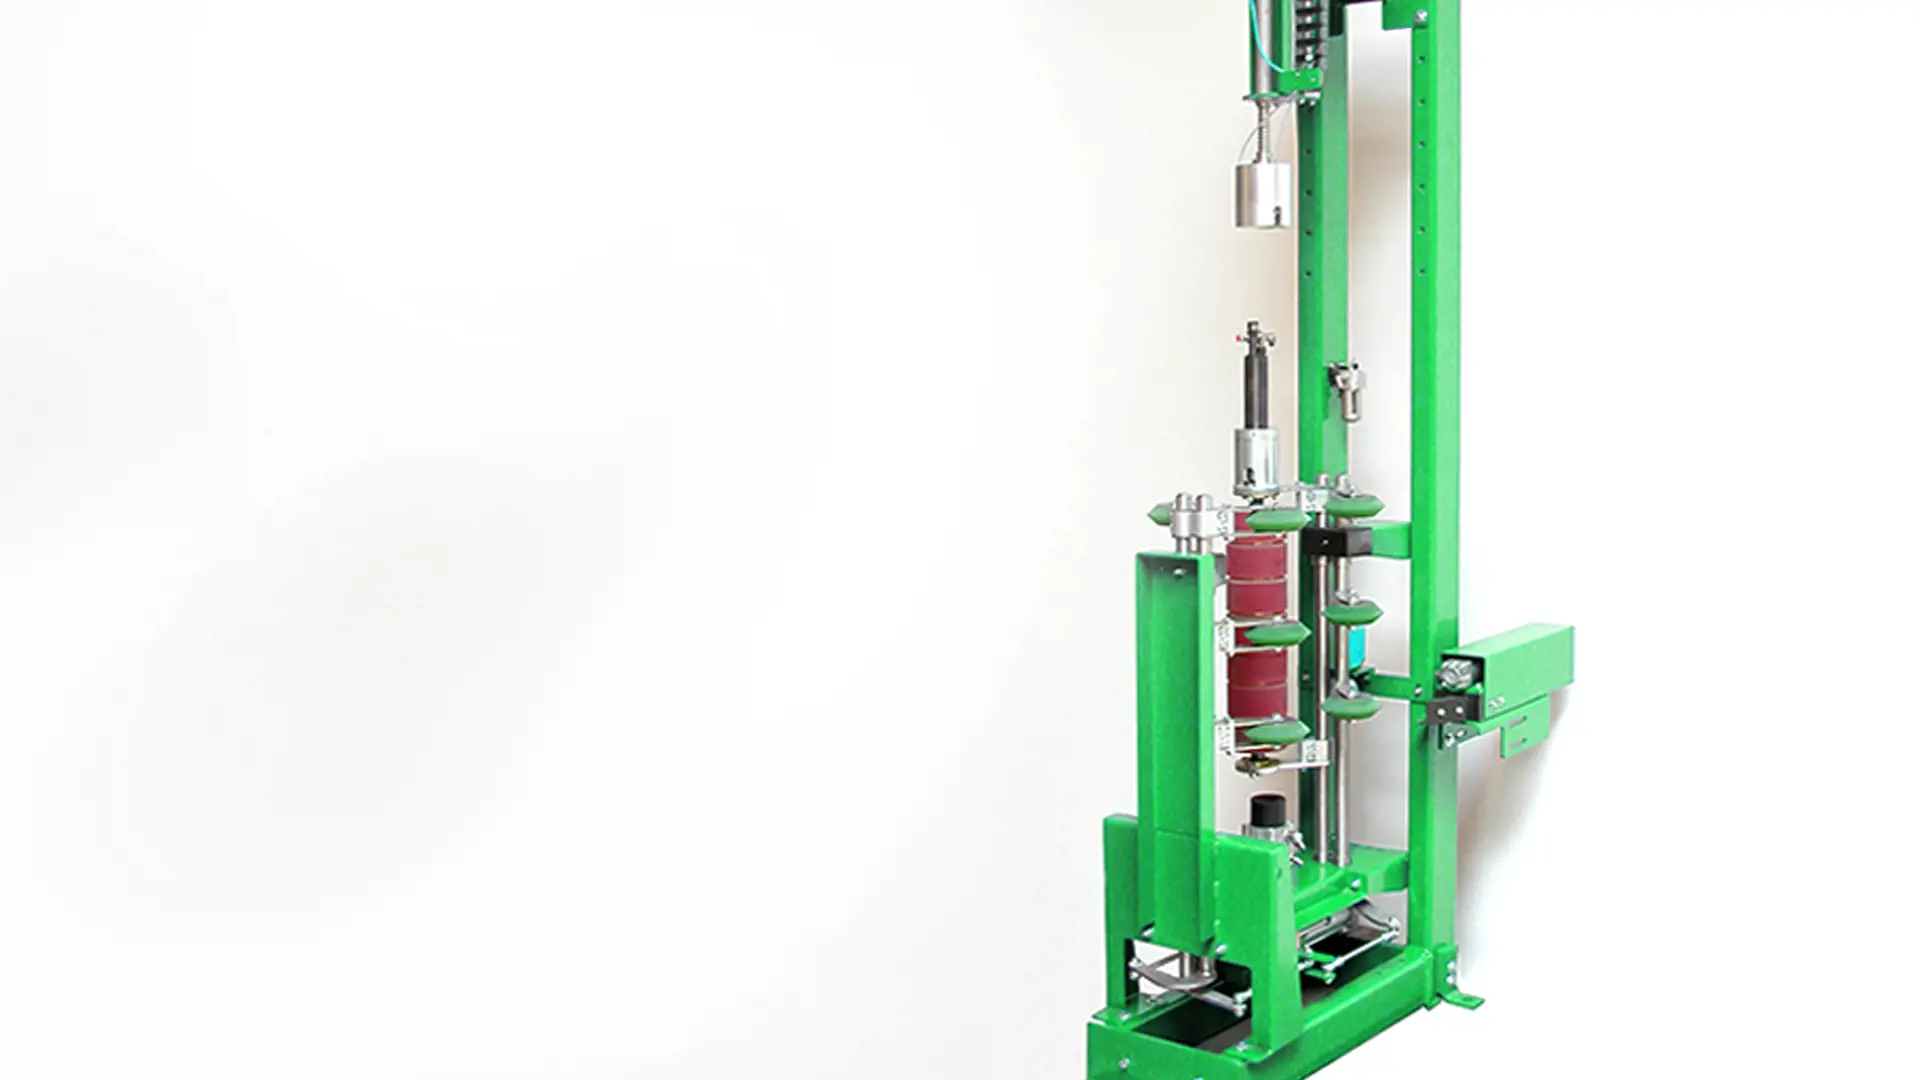 image of a green valve orientation machine